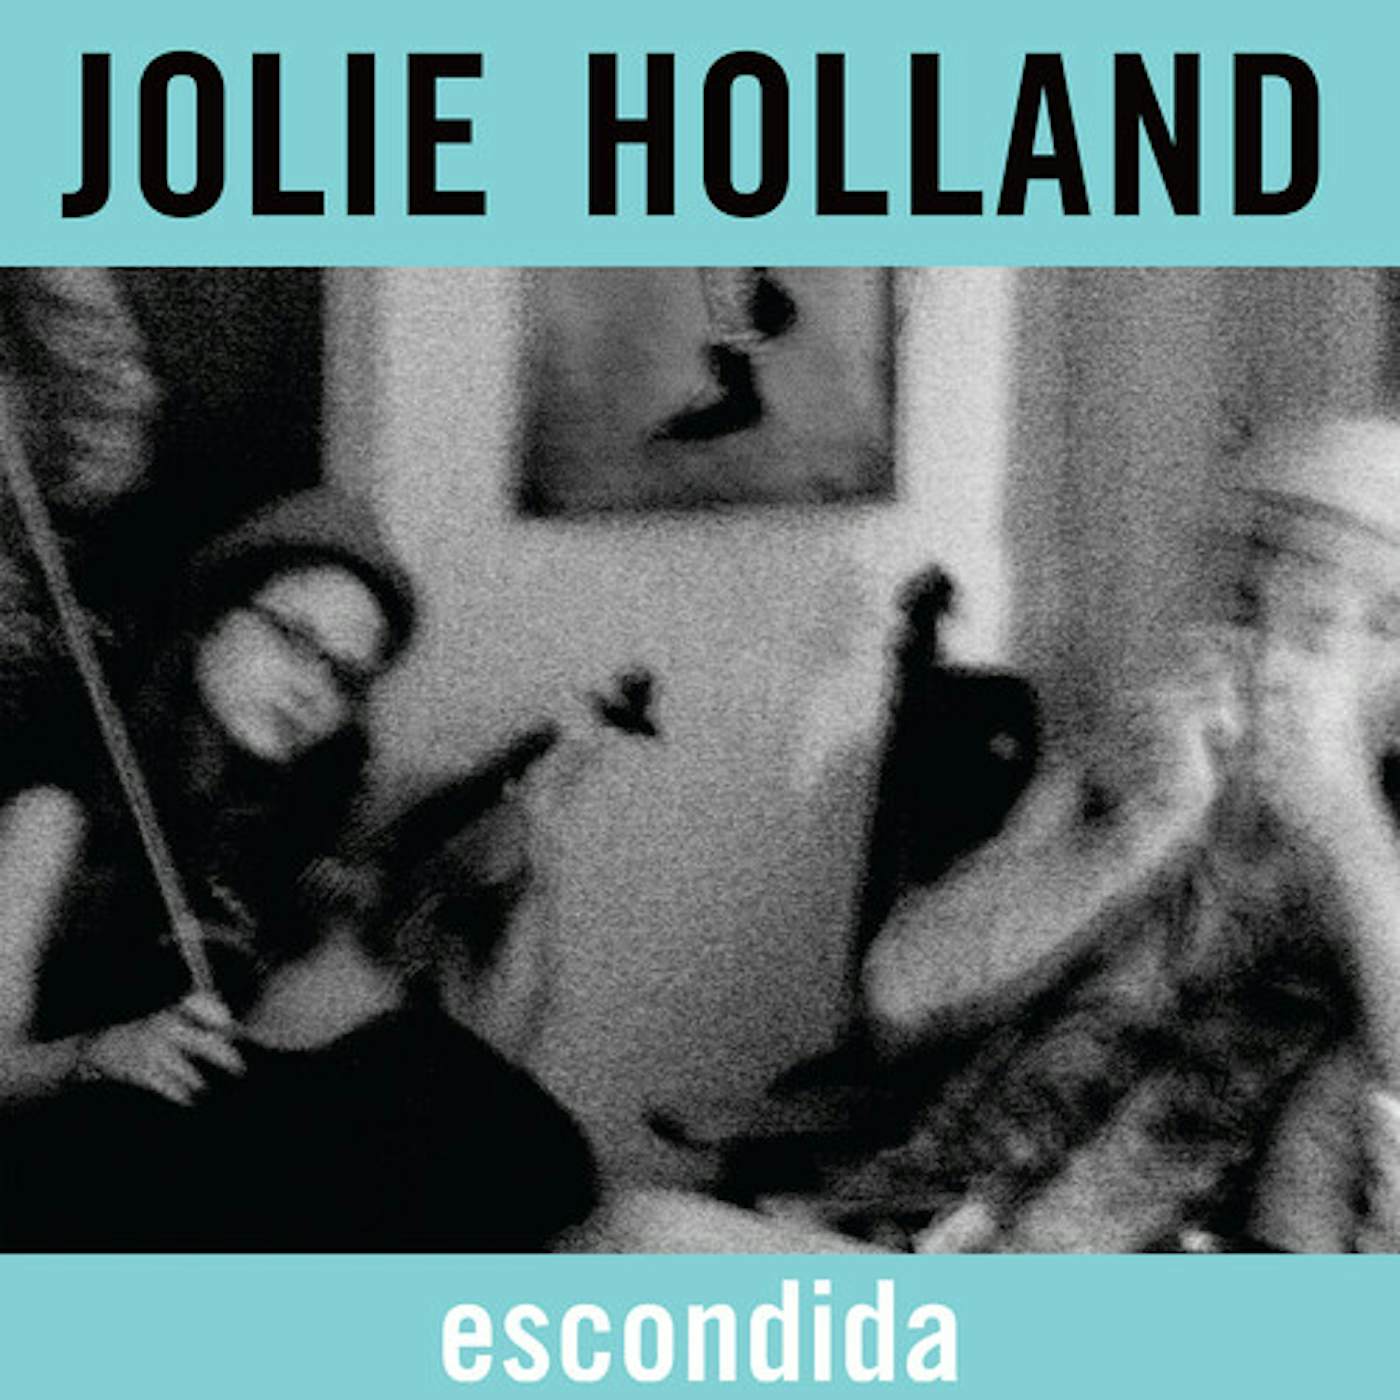 Jolie Holland Escondida Vinyl Record